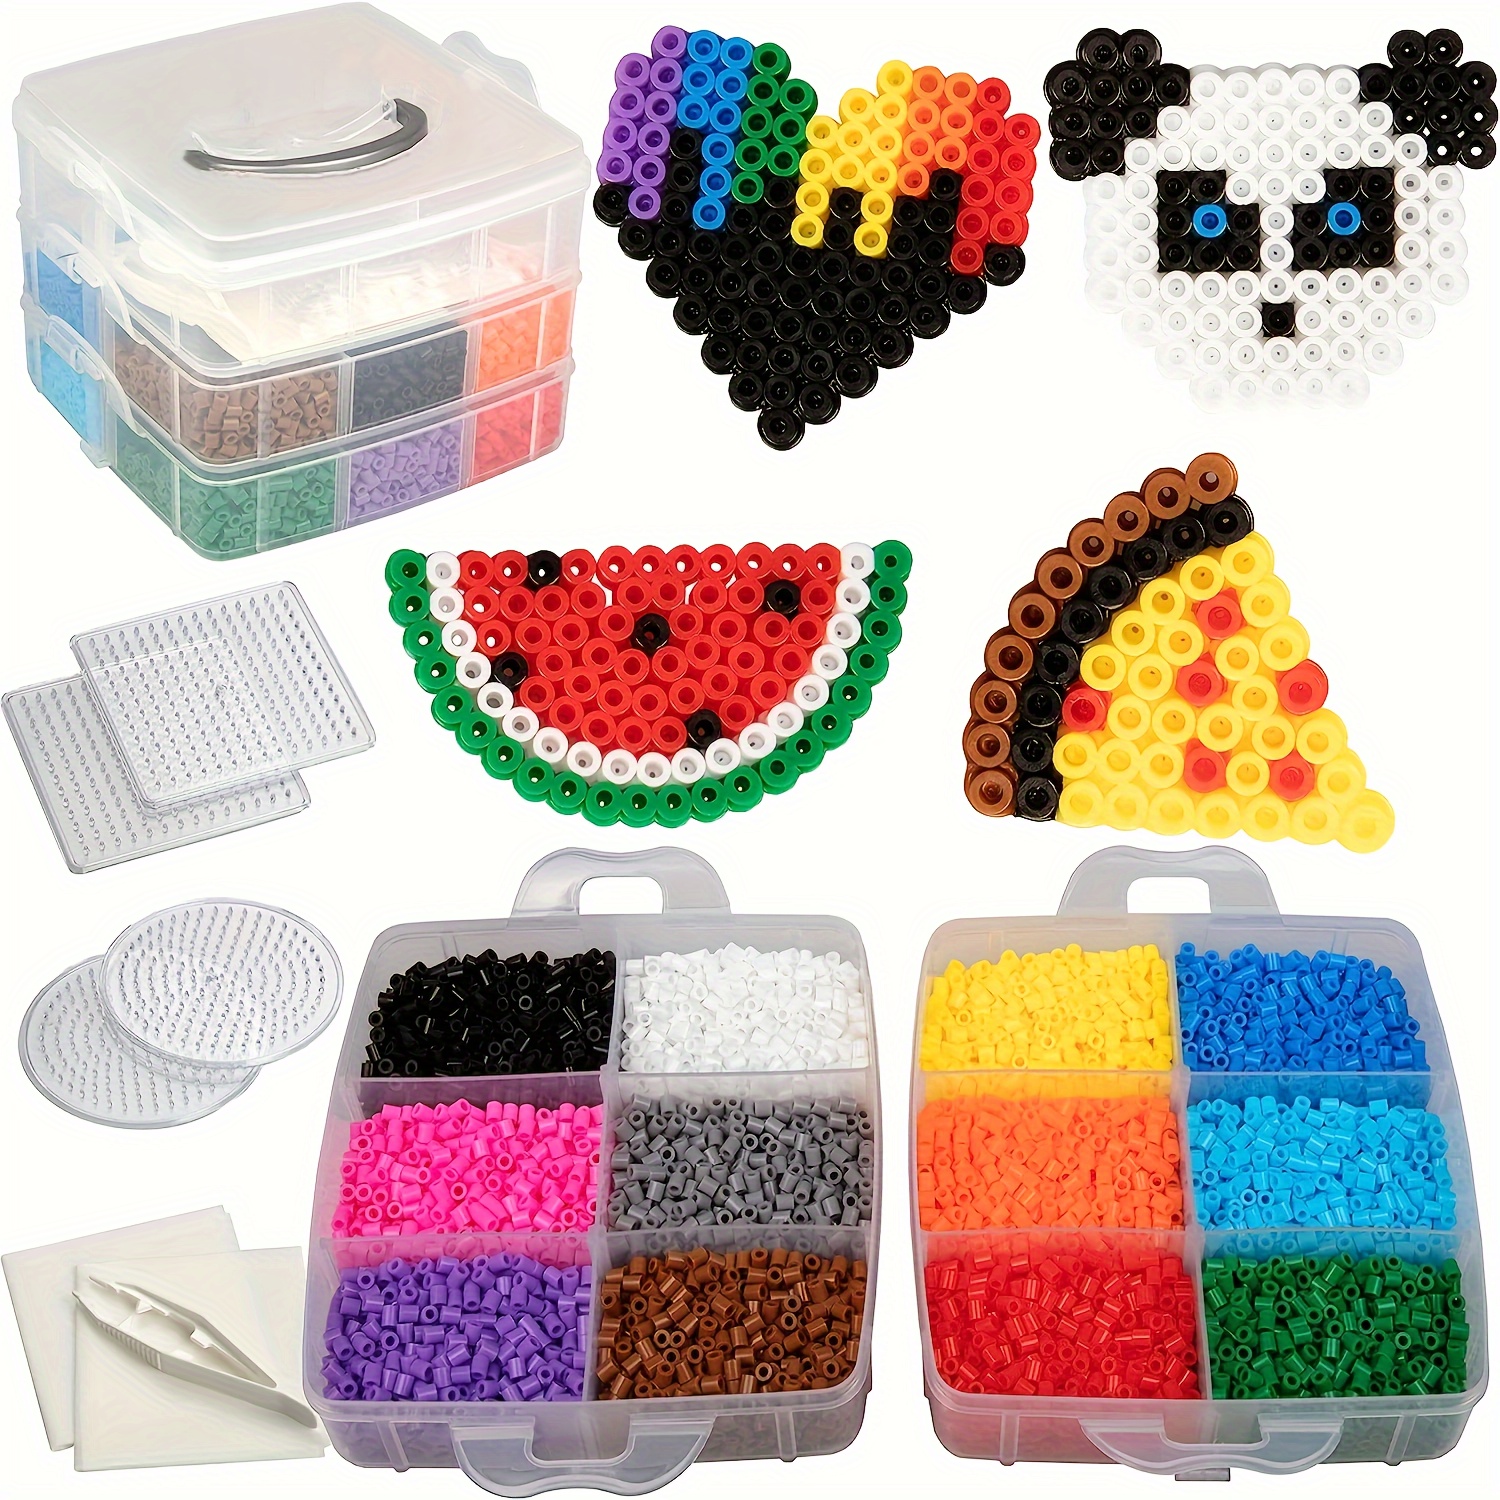 

10000pcs Fuse Bead Super Carrying Case Kit, 12 Multi Colors, Tweezers, Peg Boards, Melt Iron Paper, Bulk Art Craft